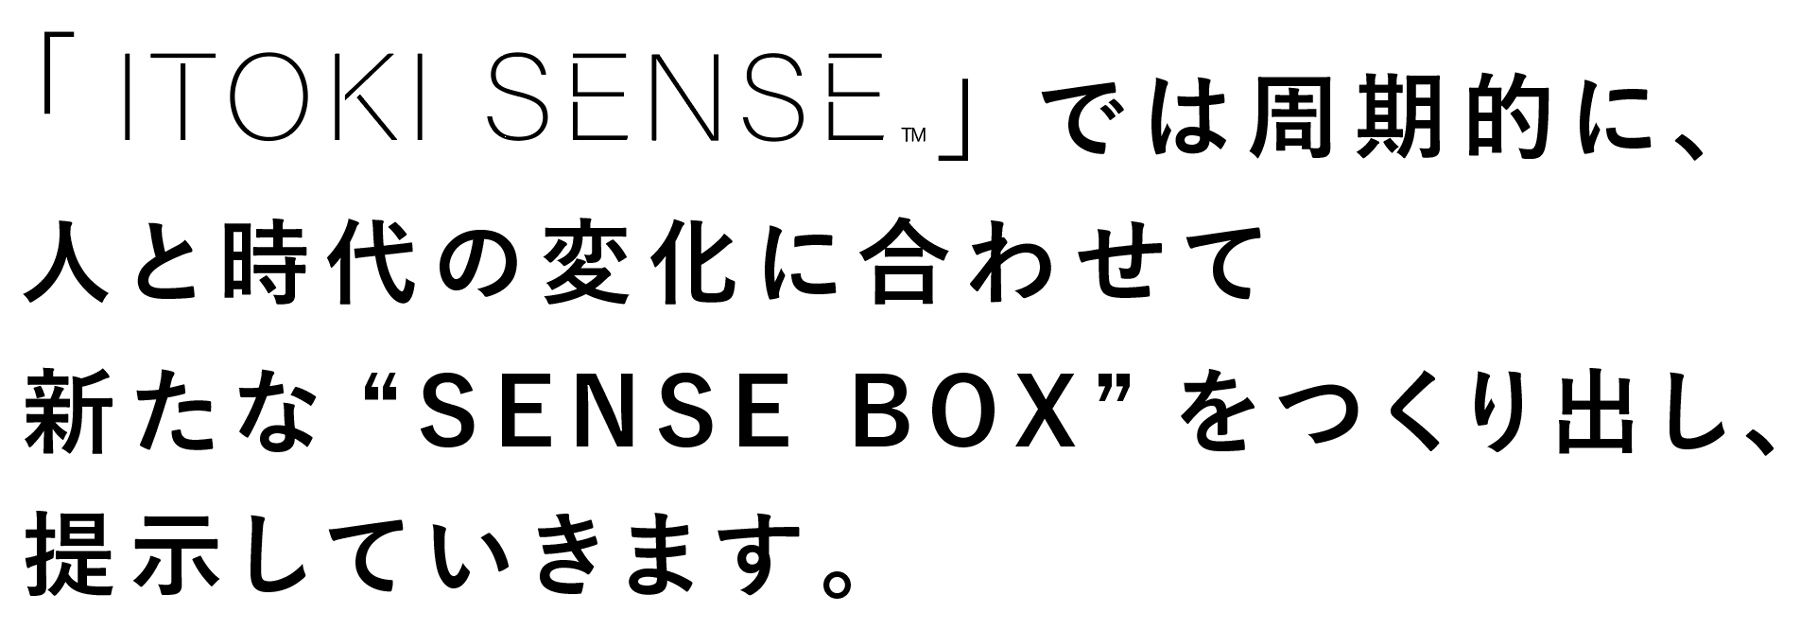 「ITOKI SENSE」では周期的に、人と時代の変化に合わせて
新たな“ SENSEBOX ” をつくり出し、提示していきます。